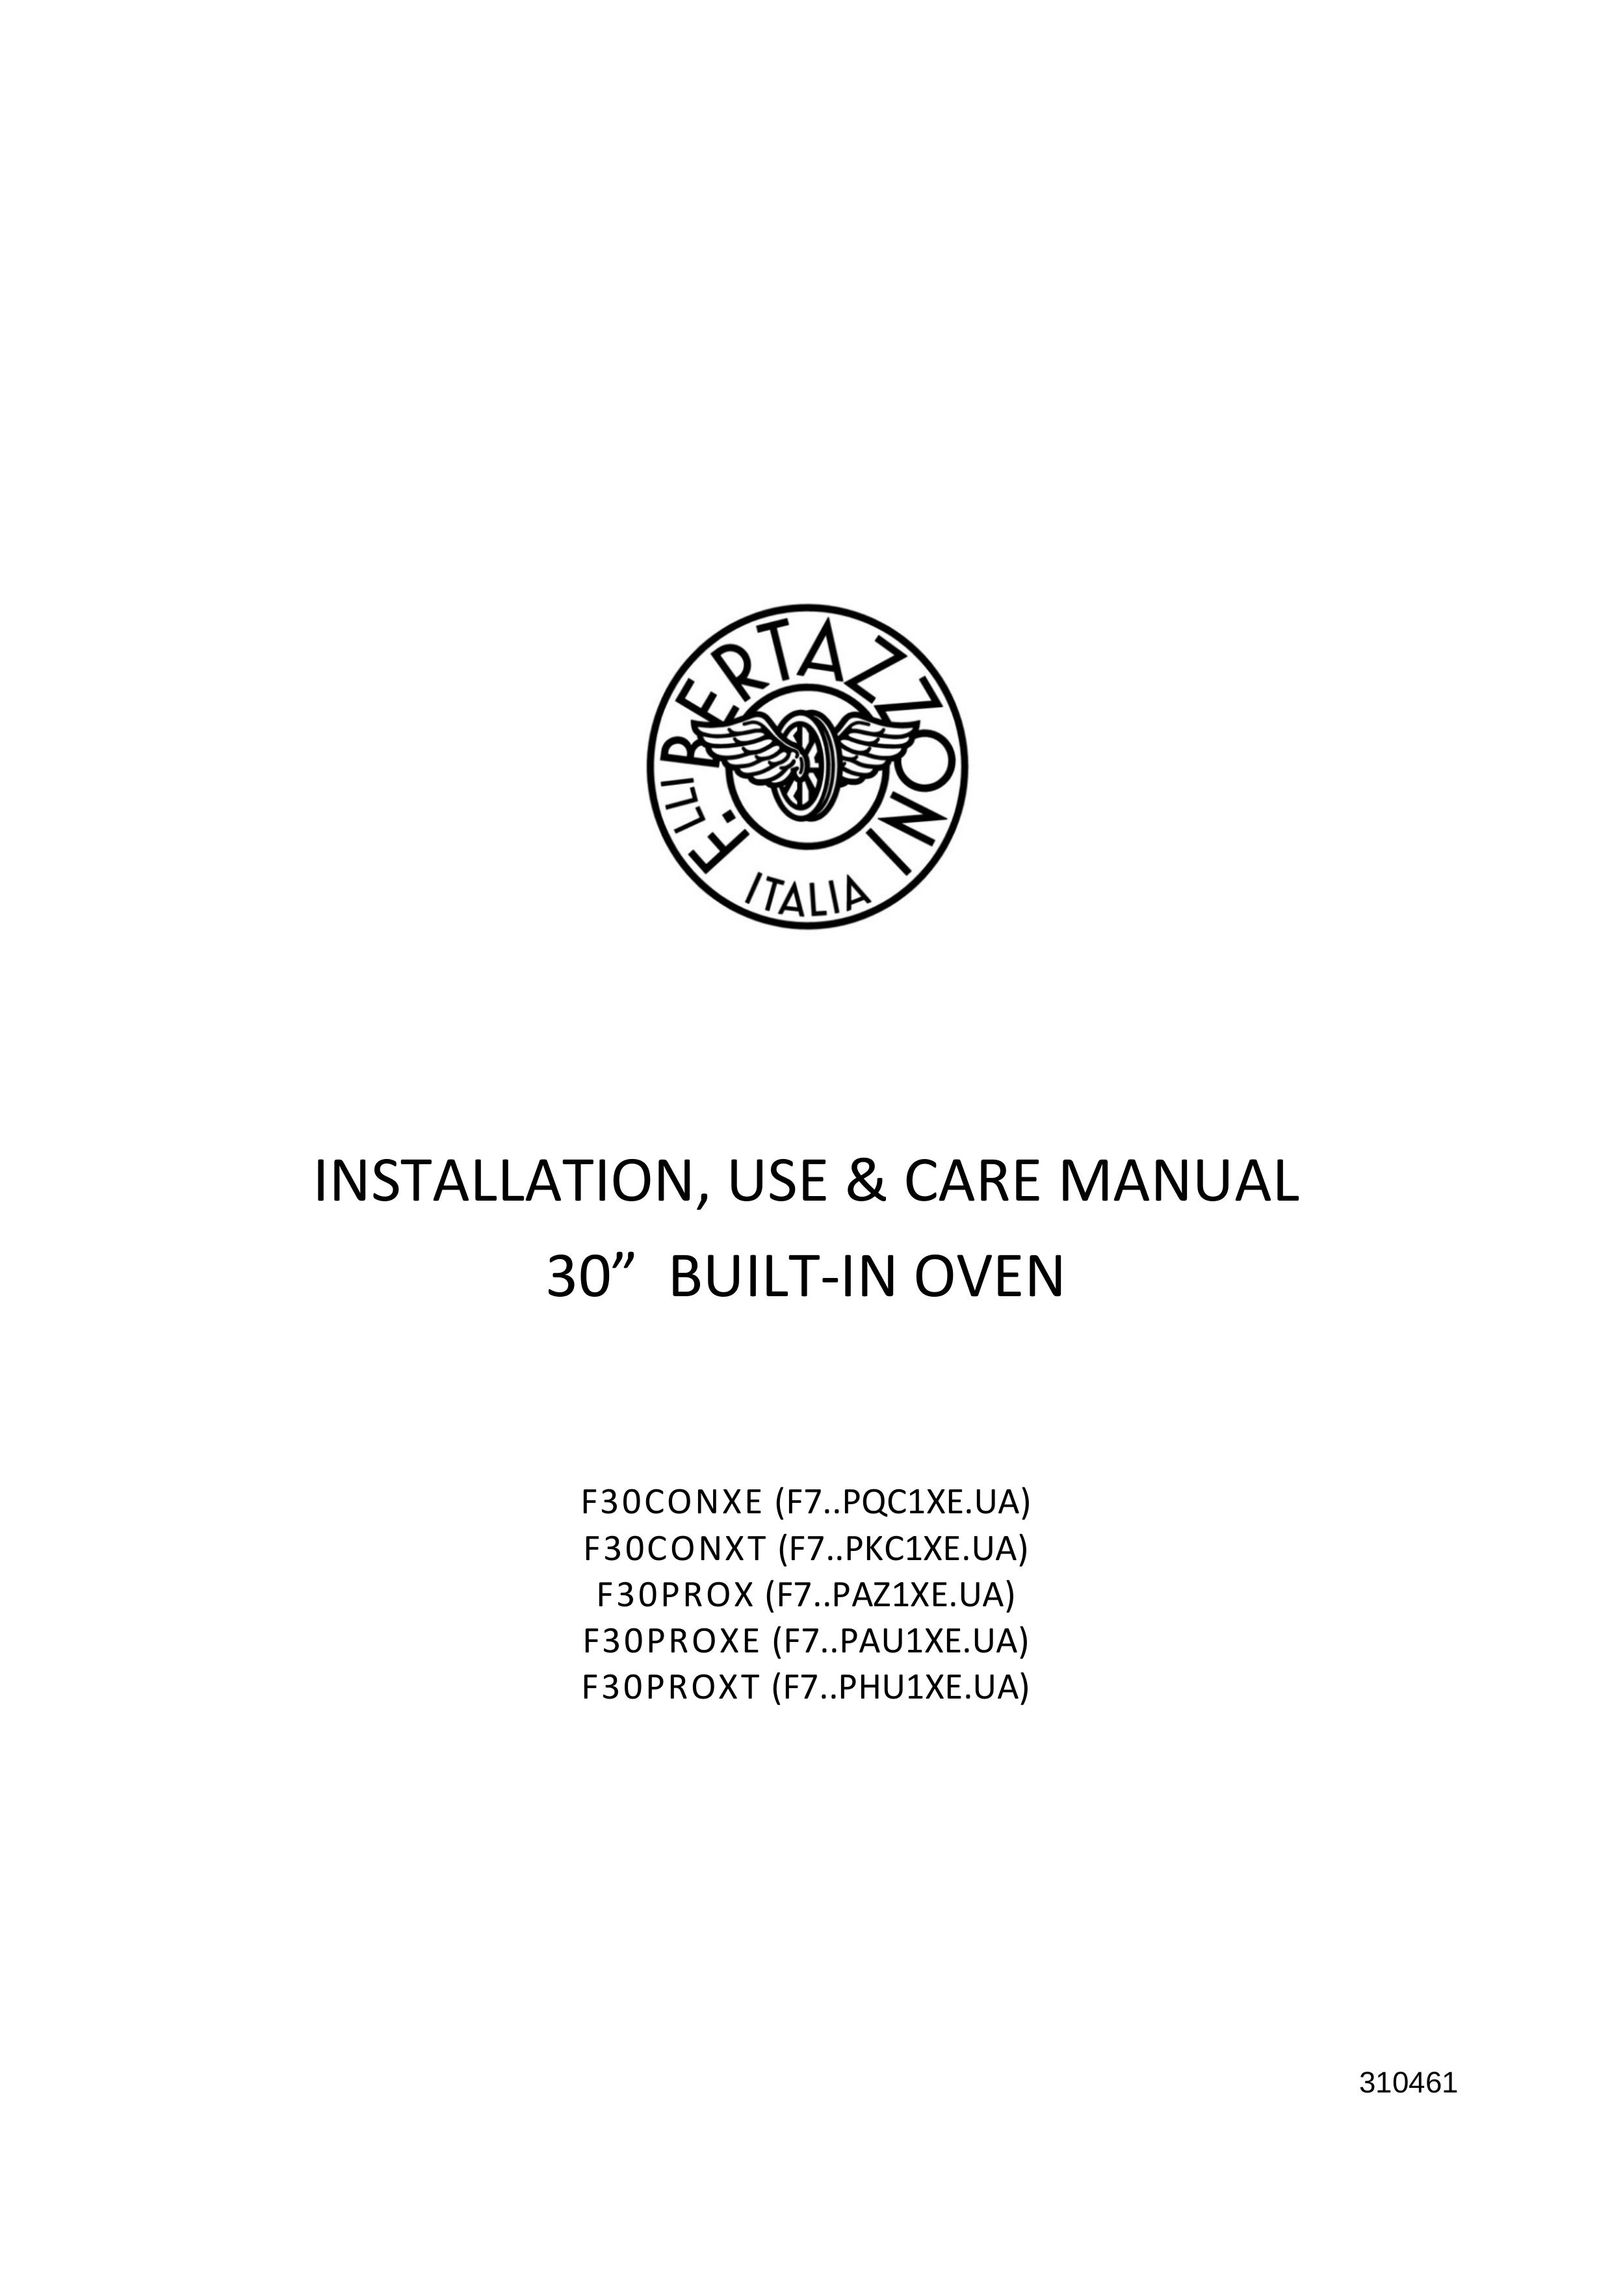 Bertazzoni F30PROXT Oven User Manual